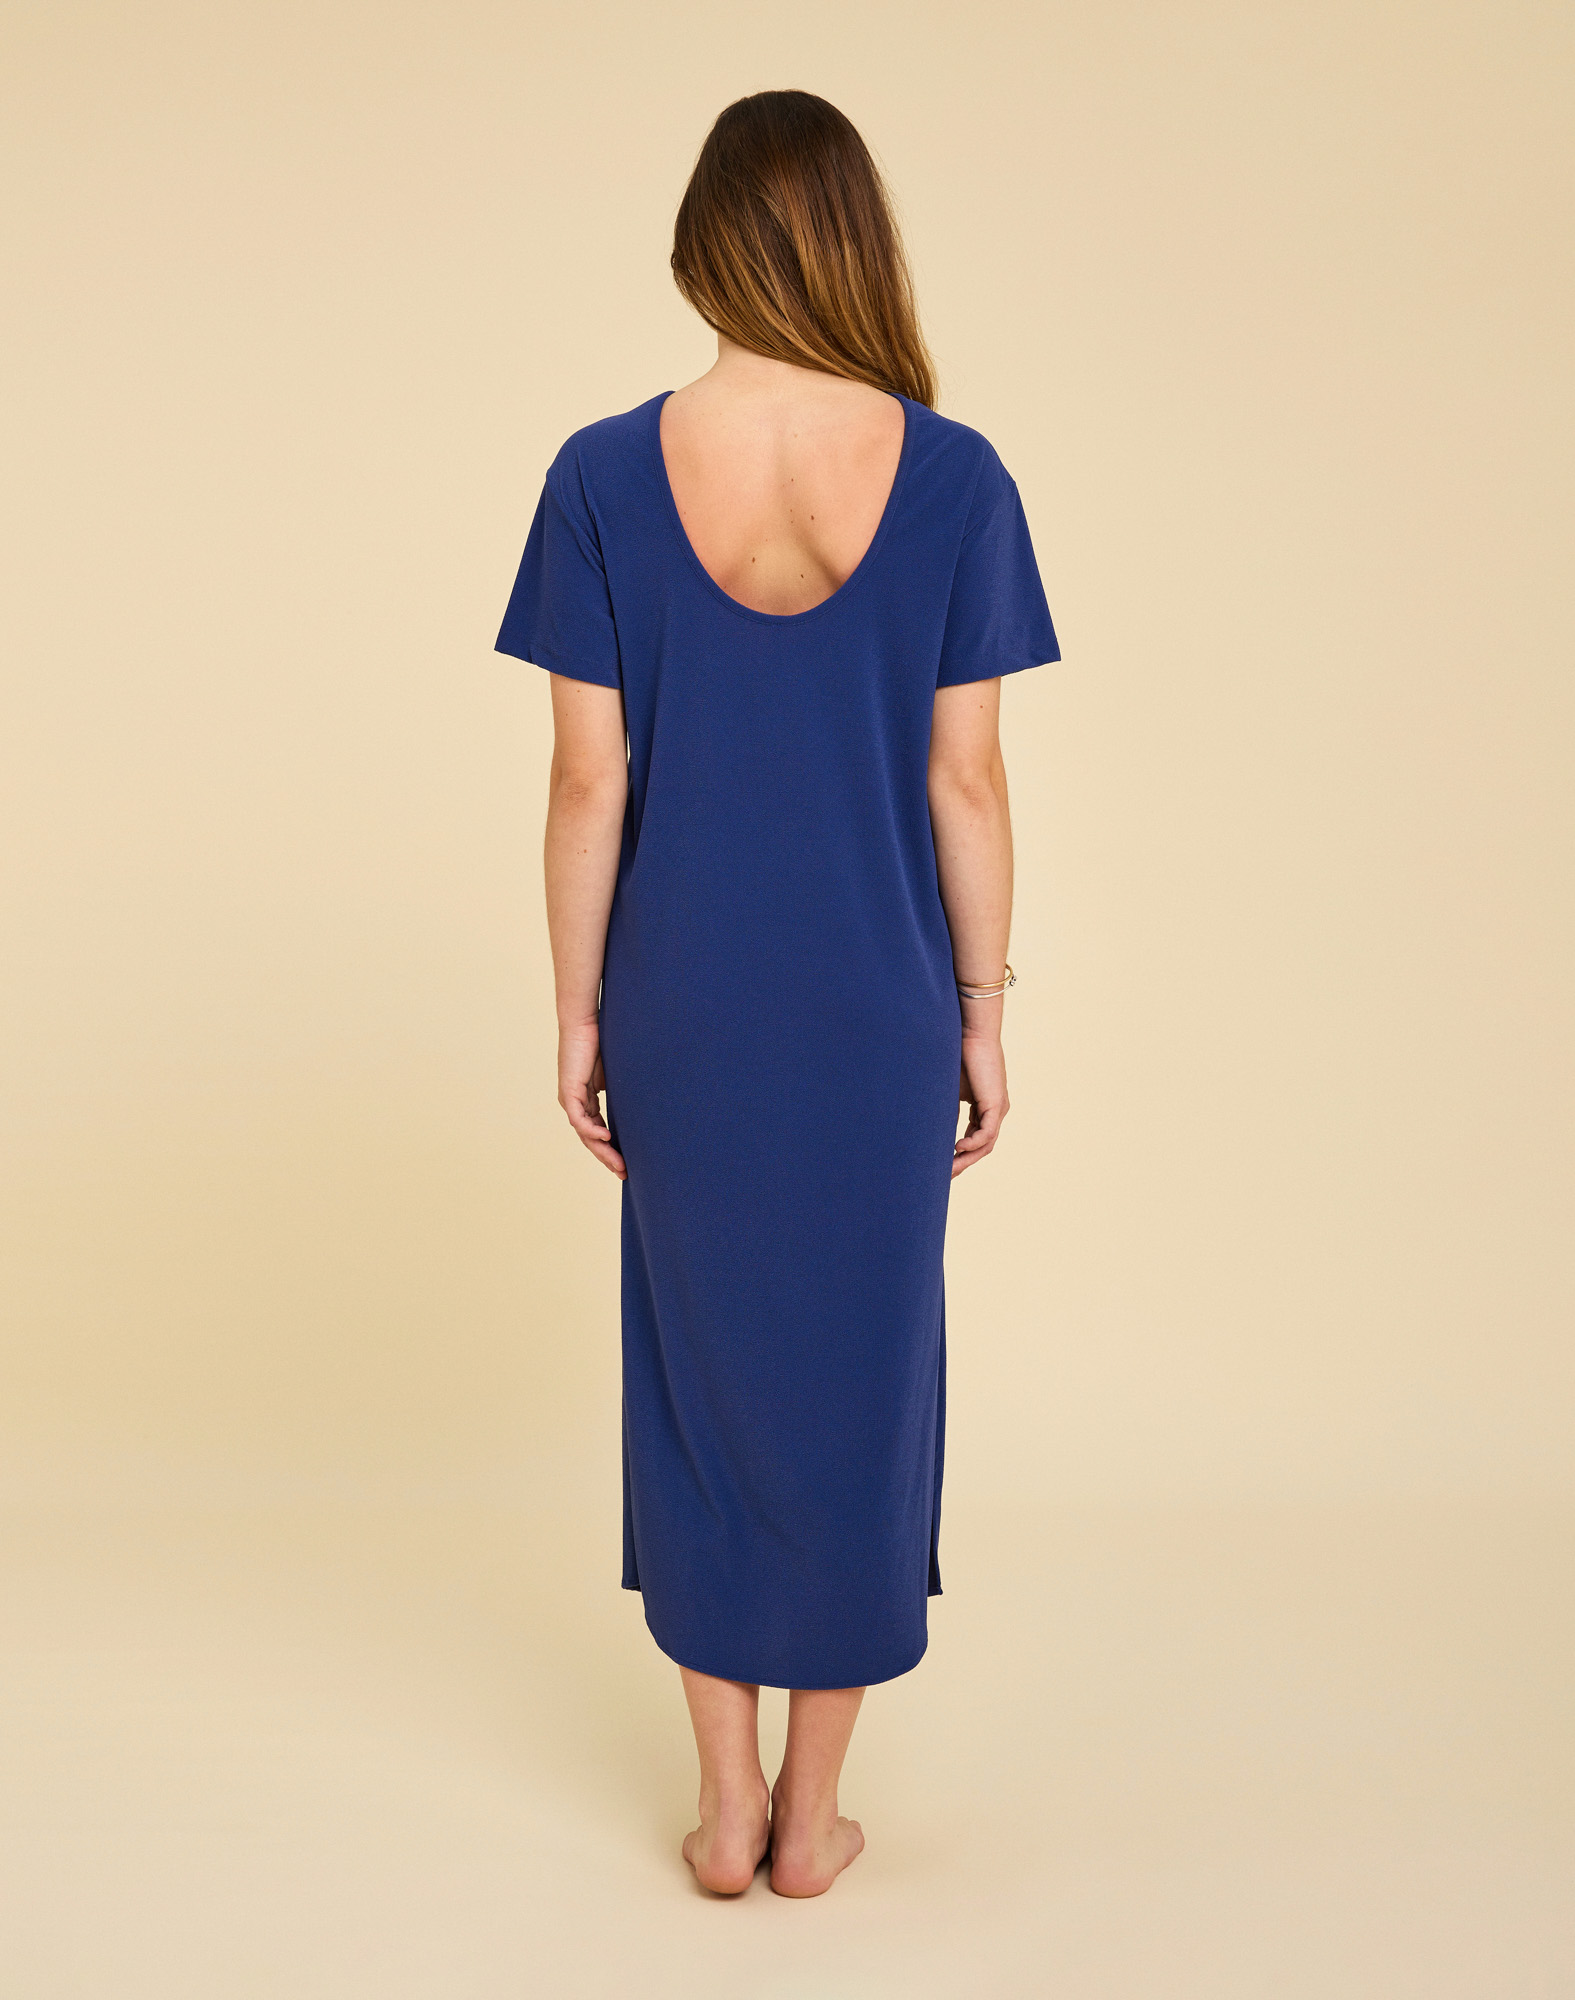 Women's dress ROBE BLUE